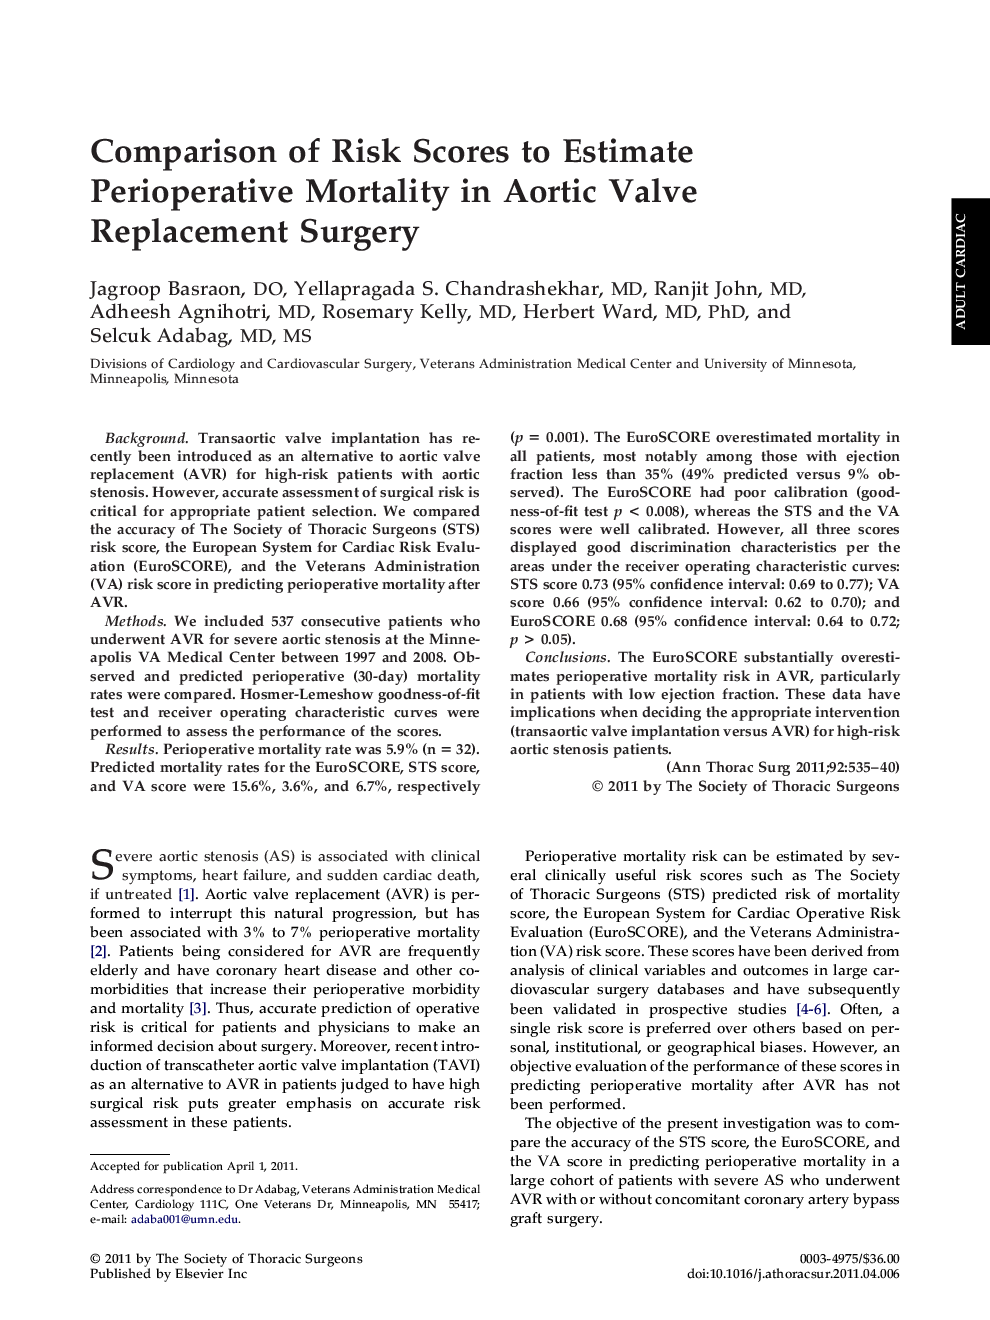 Comparison of Risk Scores to Estimate Perioperative Mortality in Aortic Valve Replacement Surgery